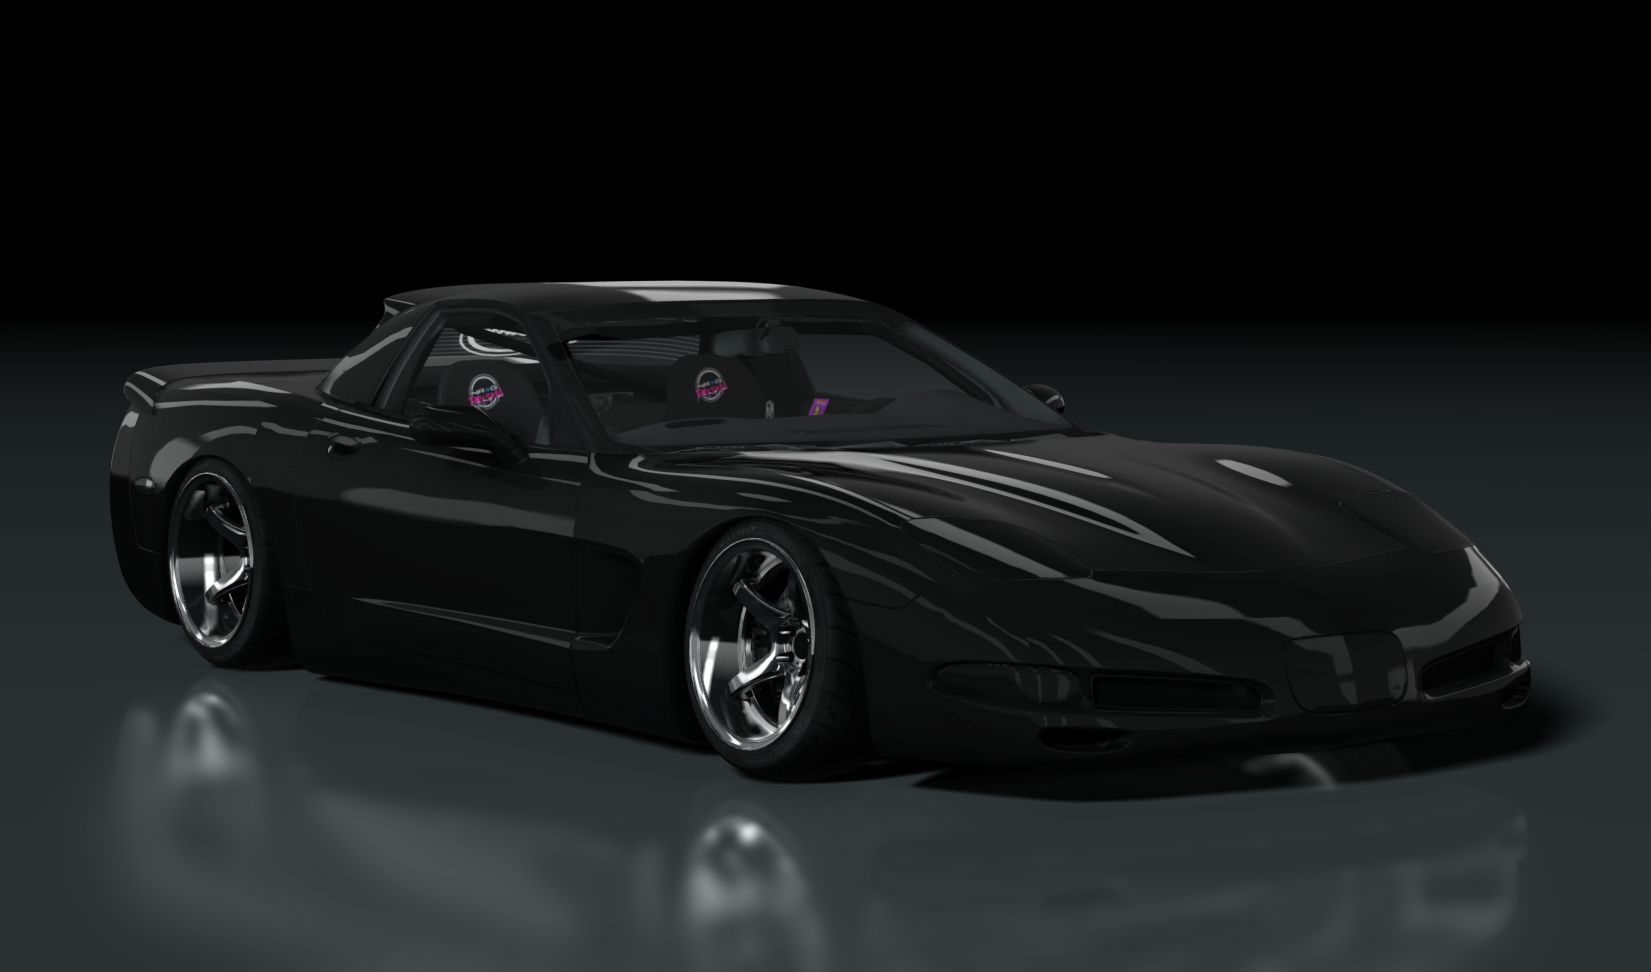 C5 Corvette mp4 Street Car, skin Black